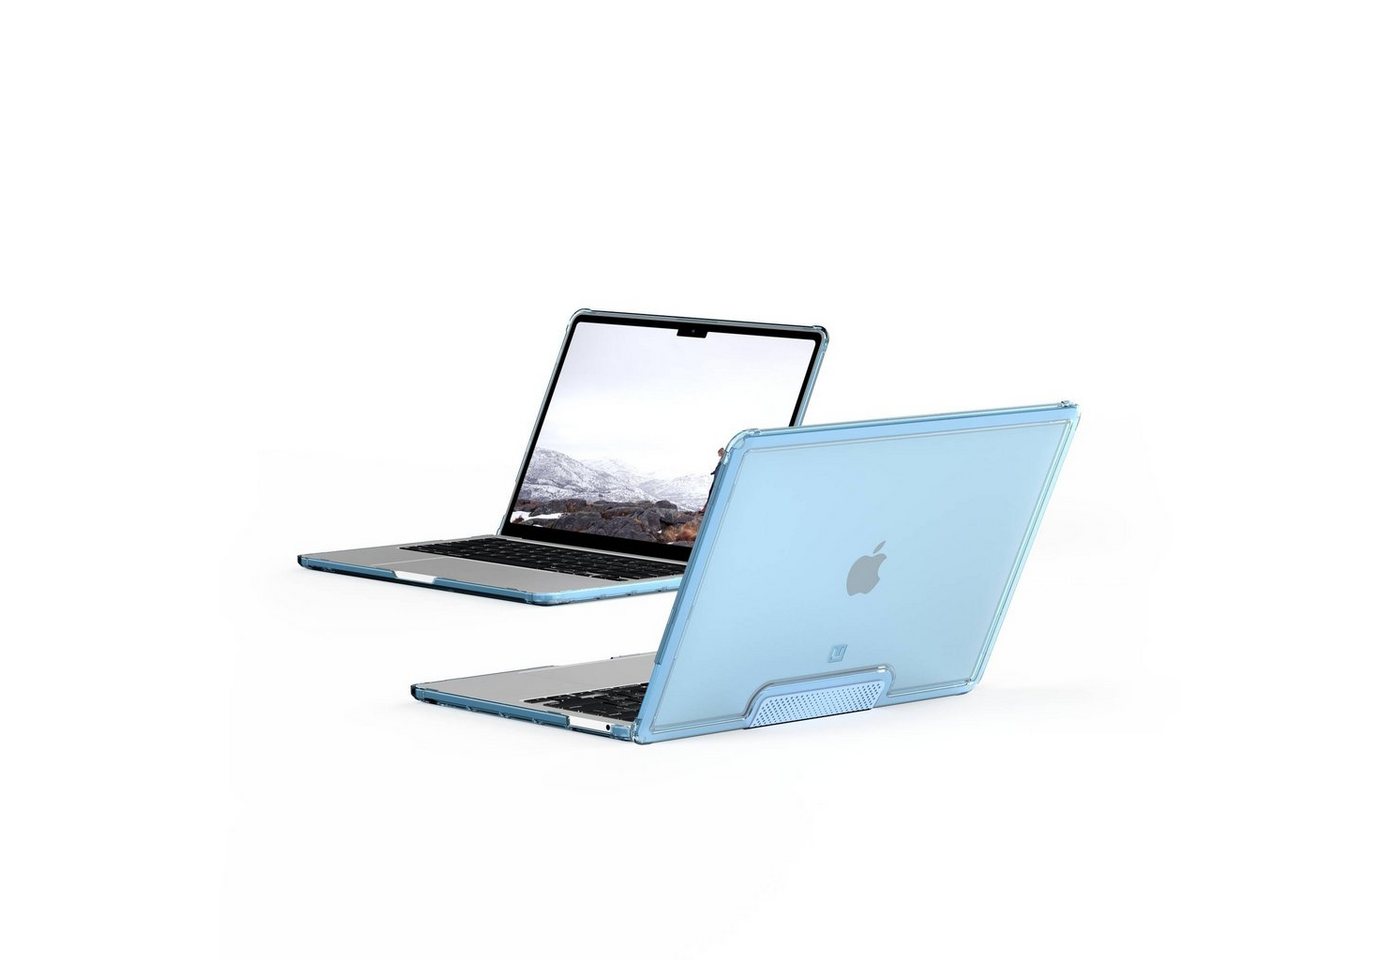 UAG Laptop-Hülle U by UAG [U] Lucent MacBook Pro 13 Case, [Hülle nach US-Militärstandard] von UAG